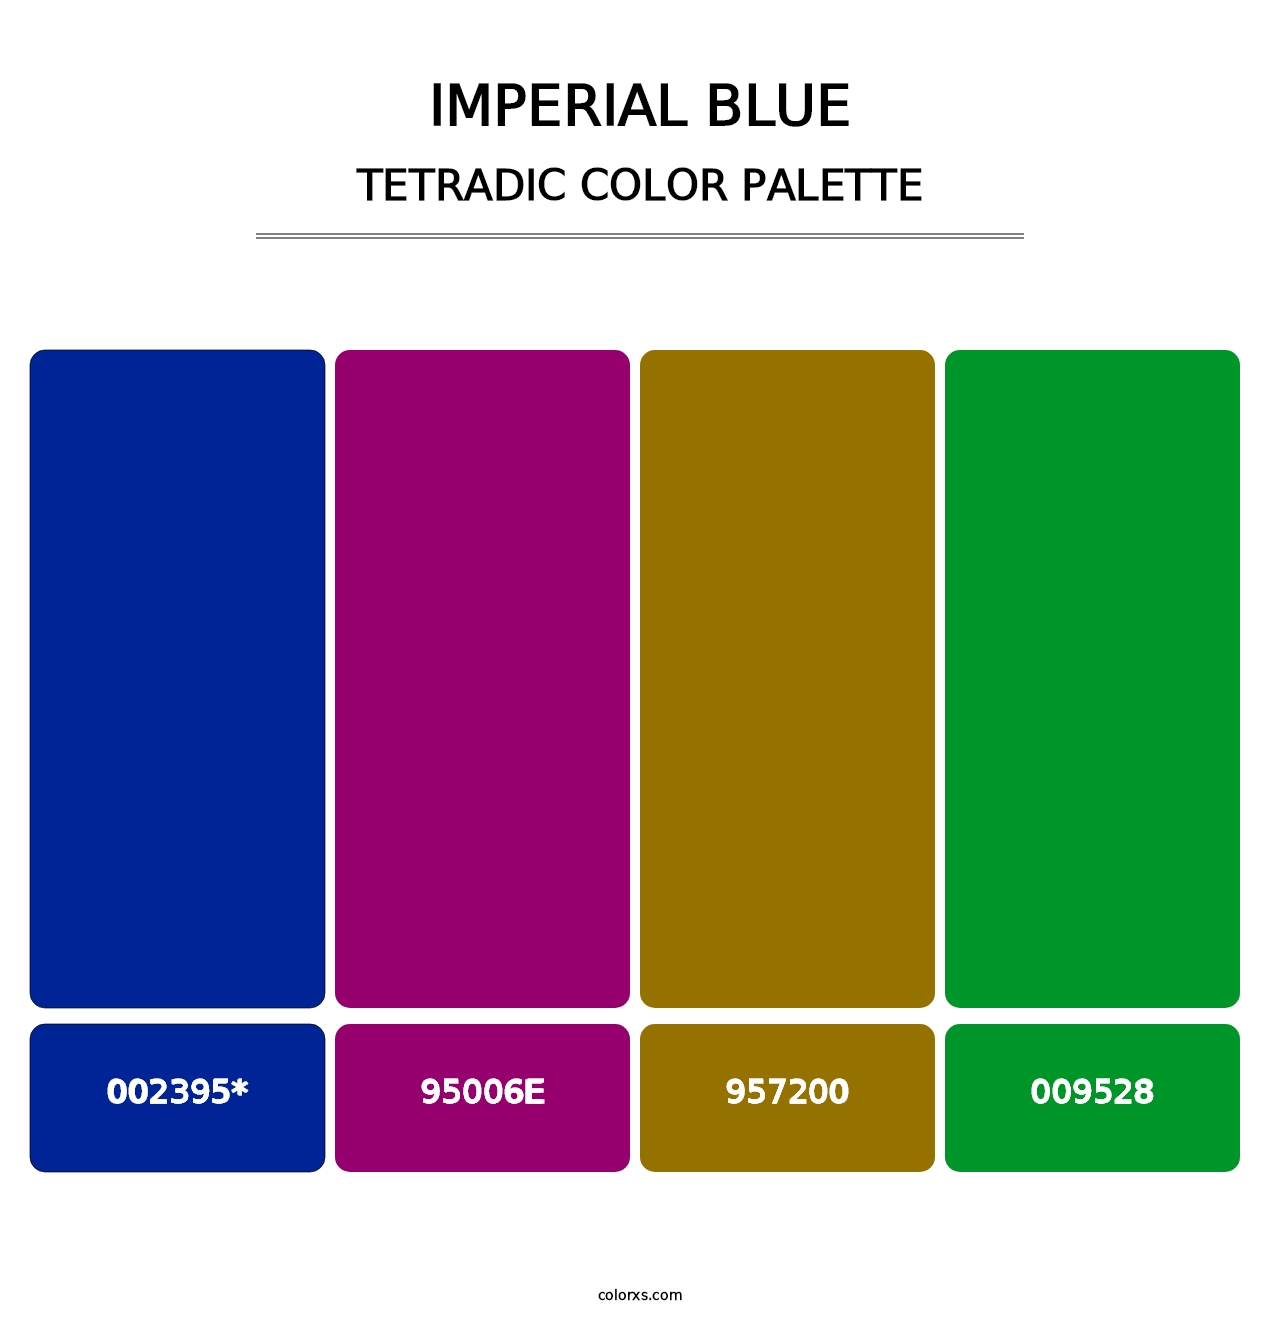 Imperial Blue - Tetradic Color Palette